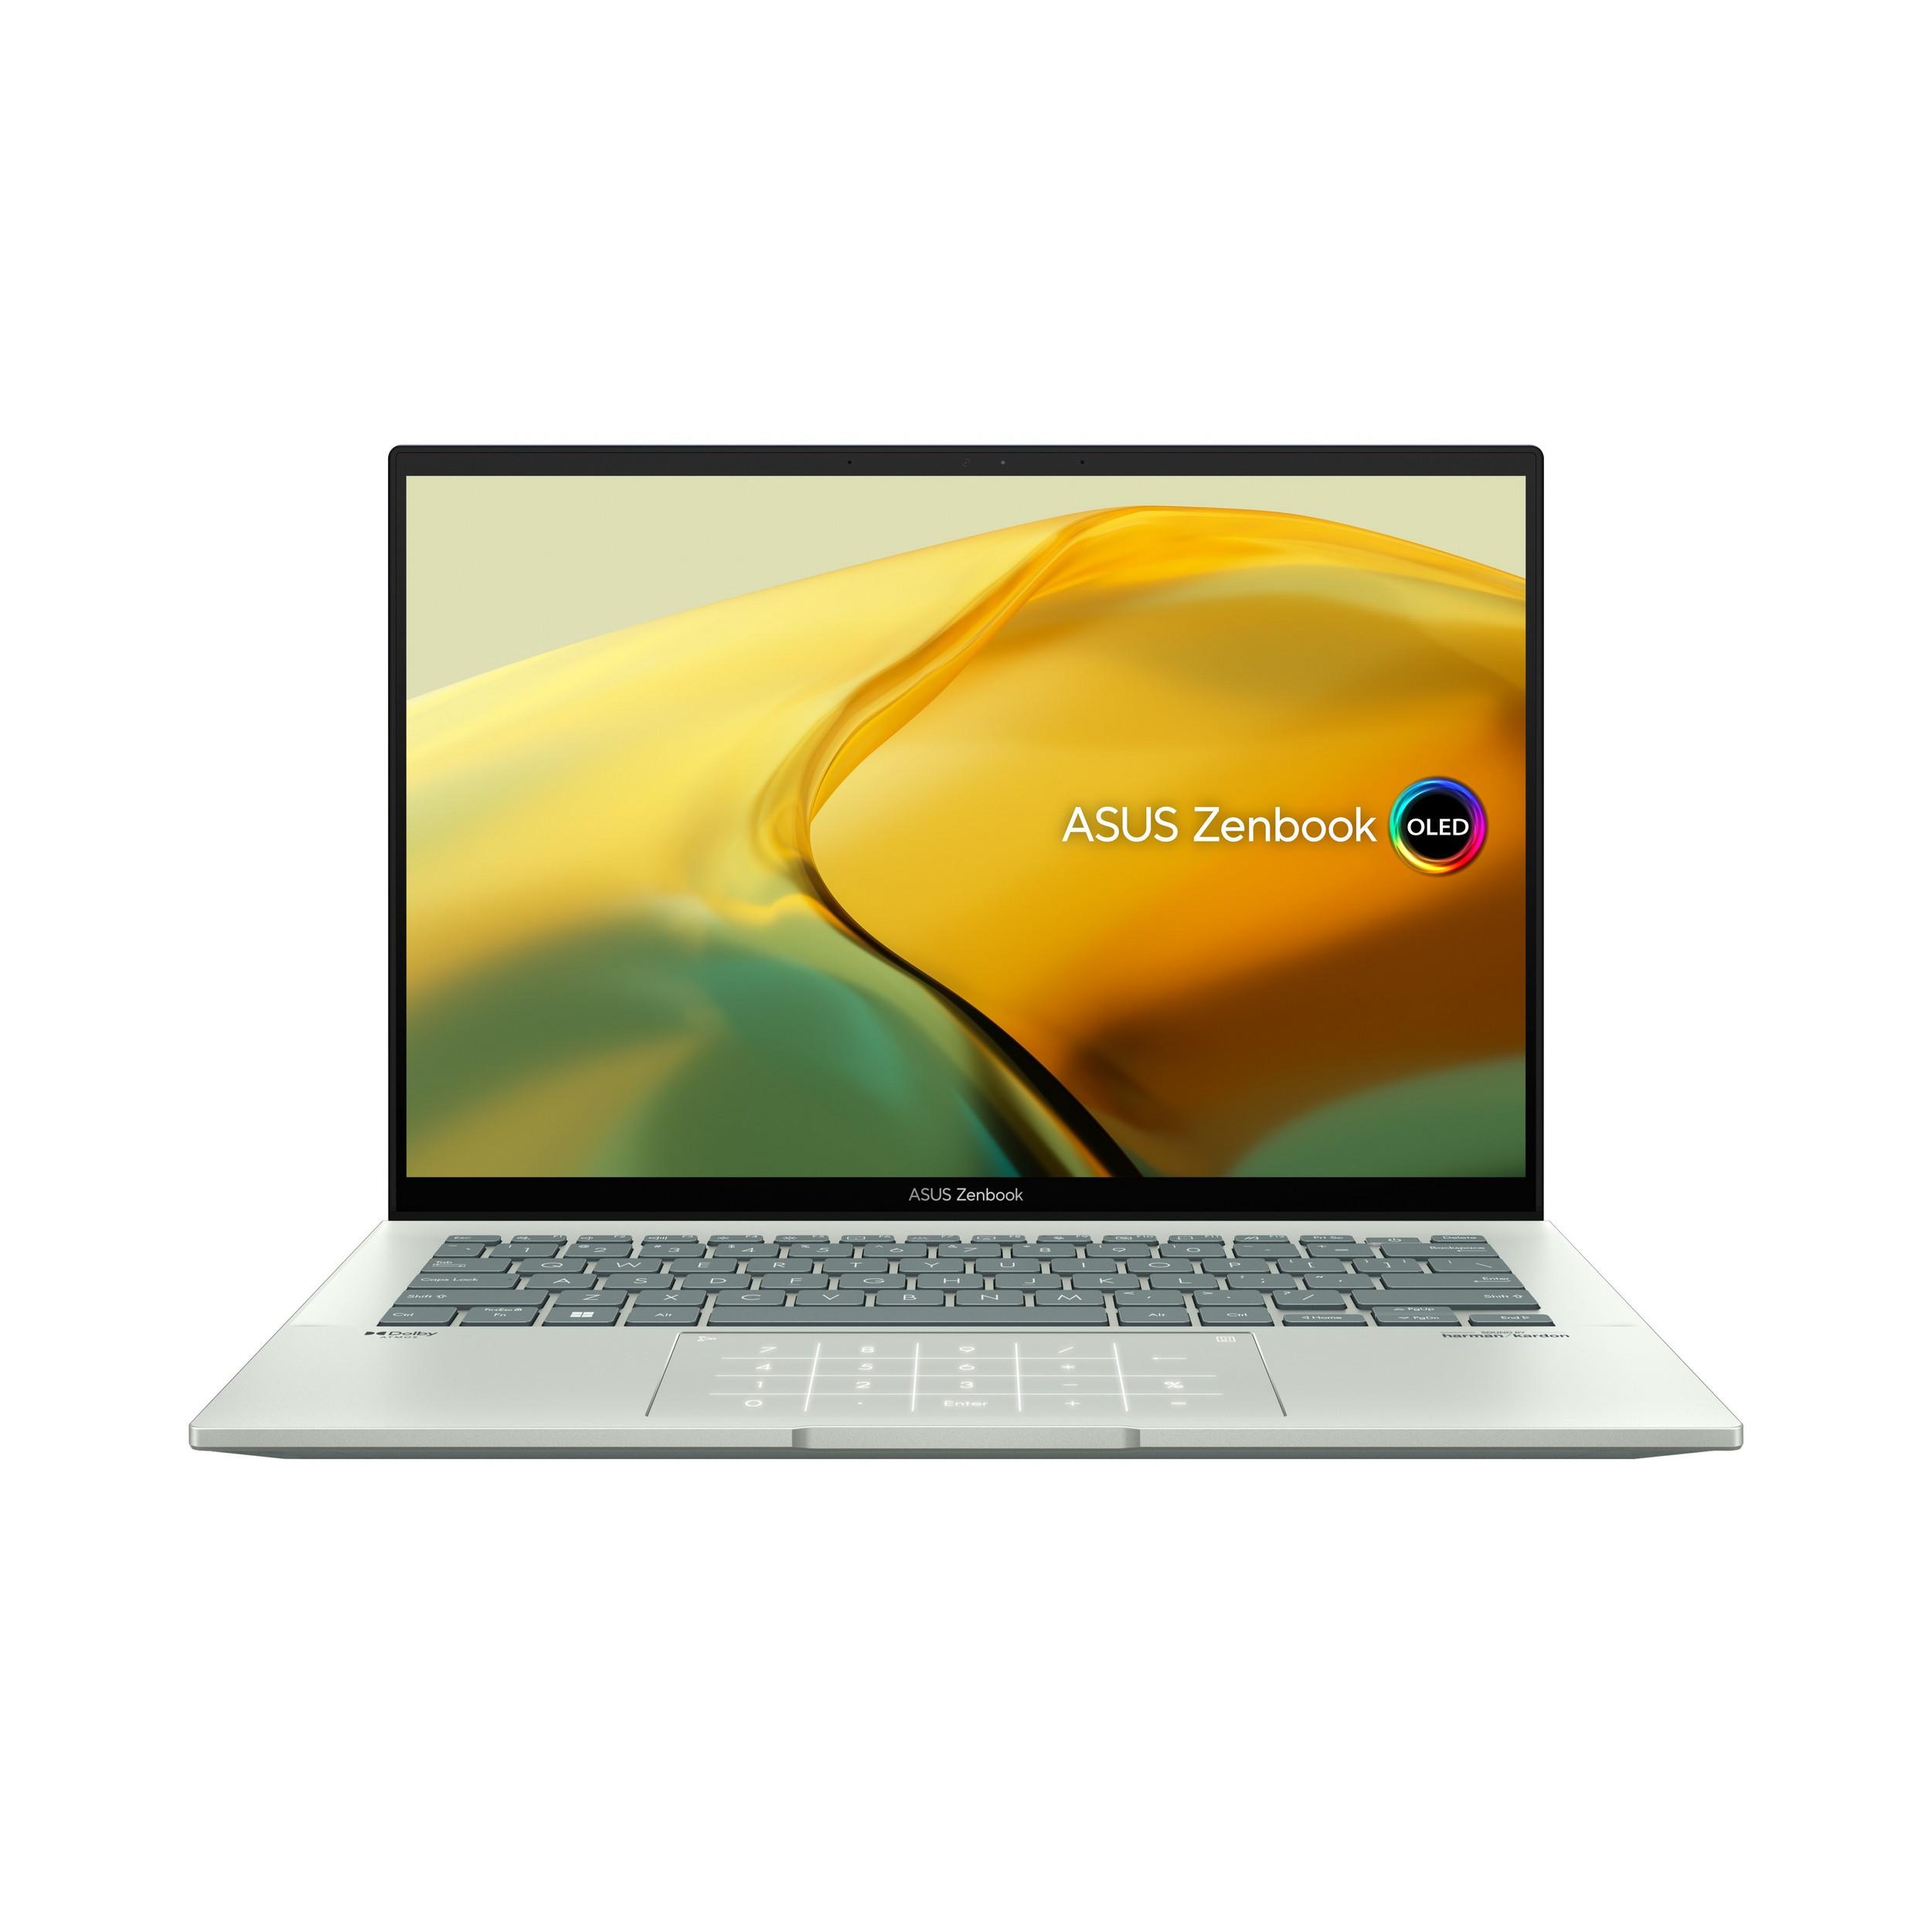 Zenbook 14 OLED (UX3402)｜Laptops For Home｜ASUS Global